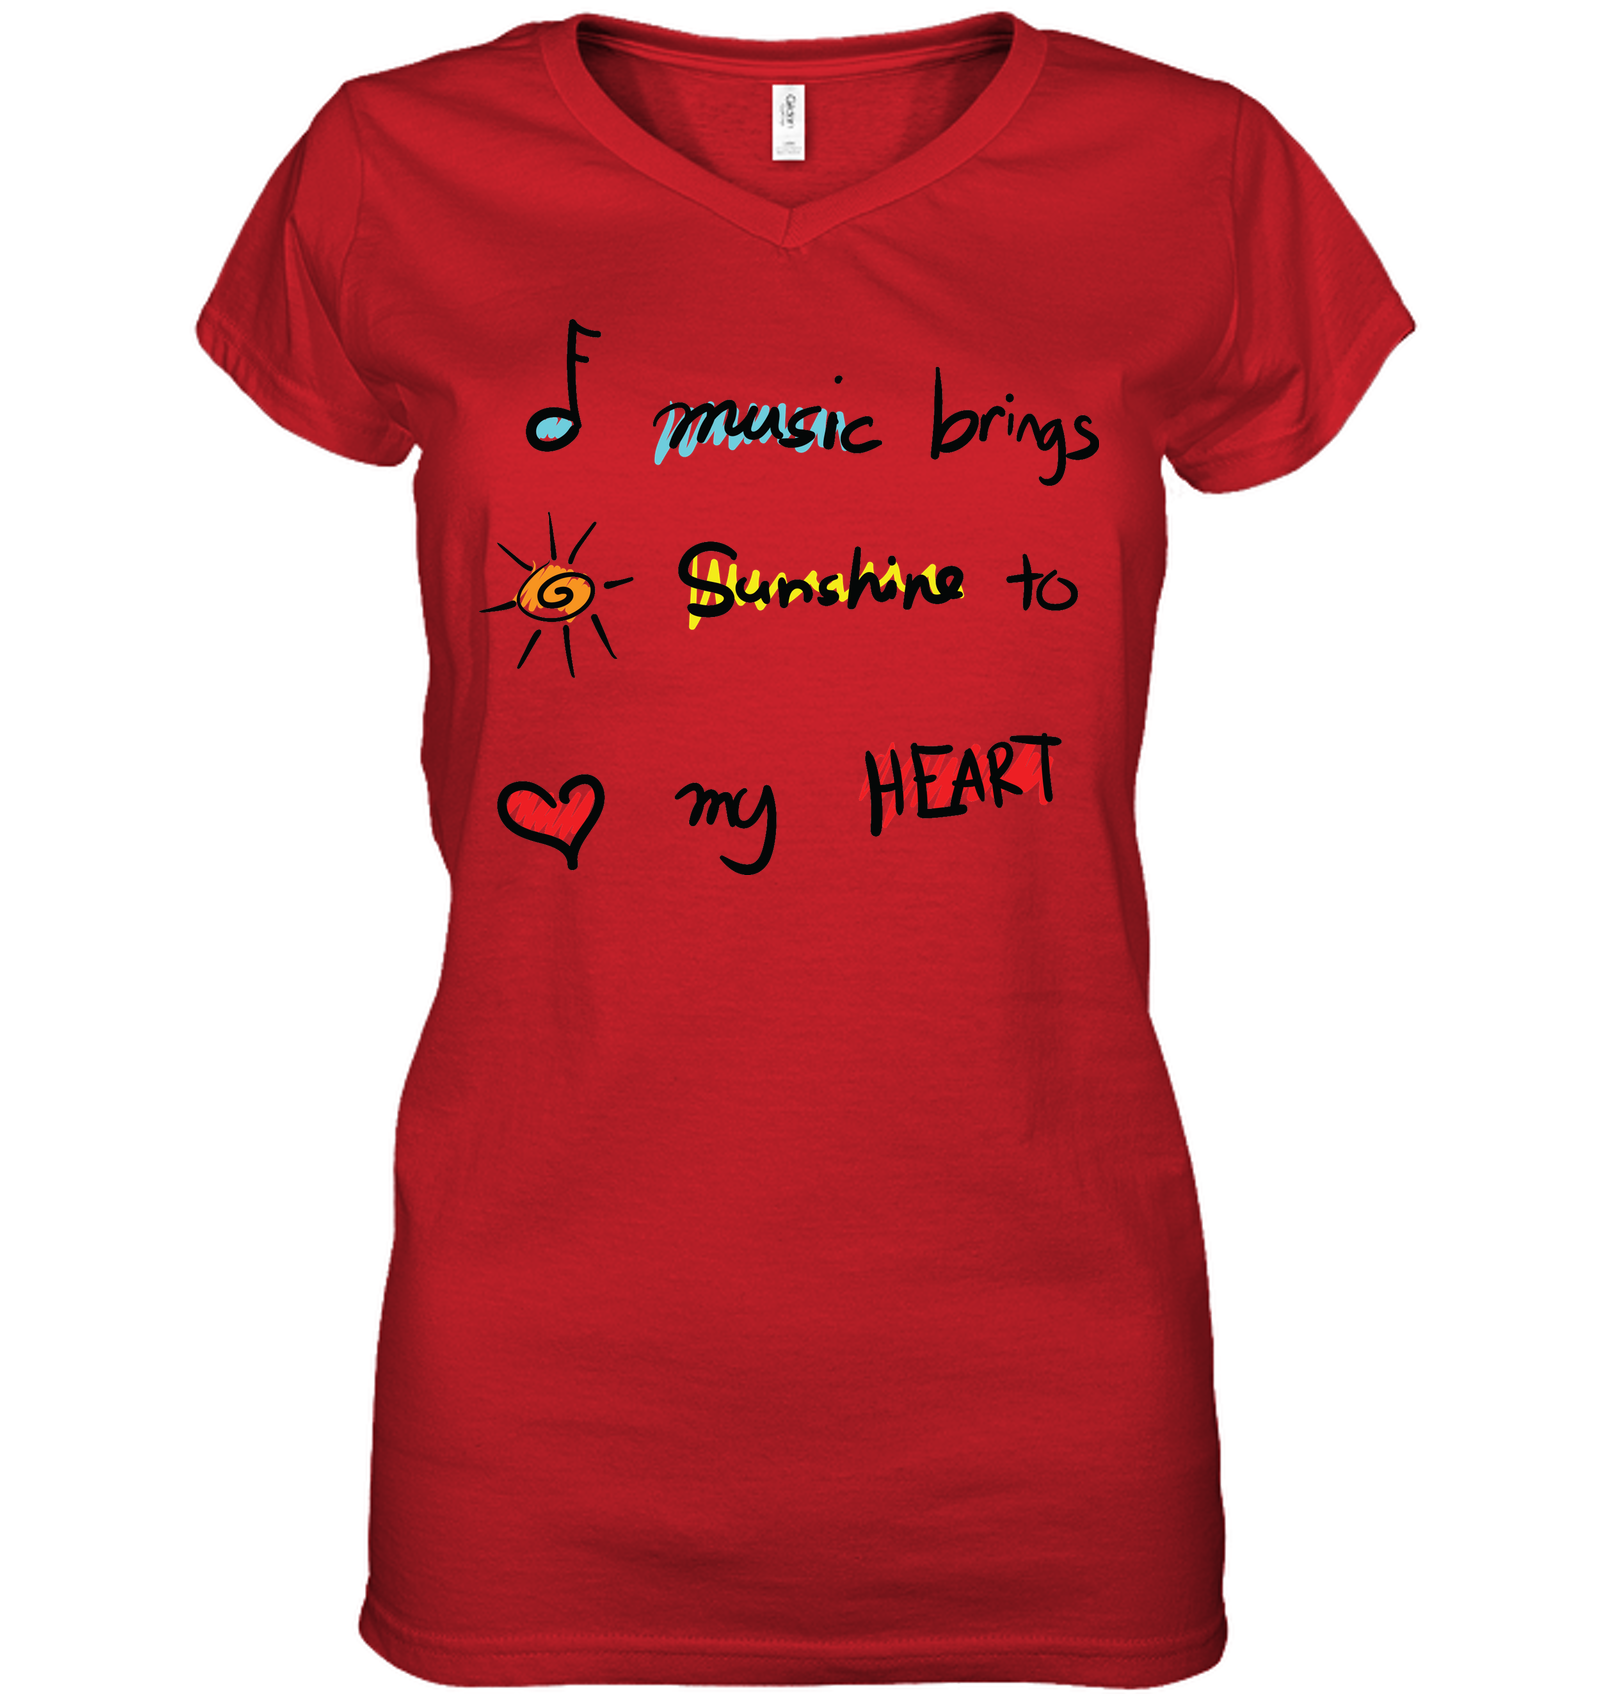 Music brings Sunshine to my Heart - Hanes Women's Nano-T® V-Neck T-Shirt